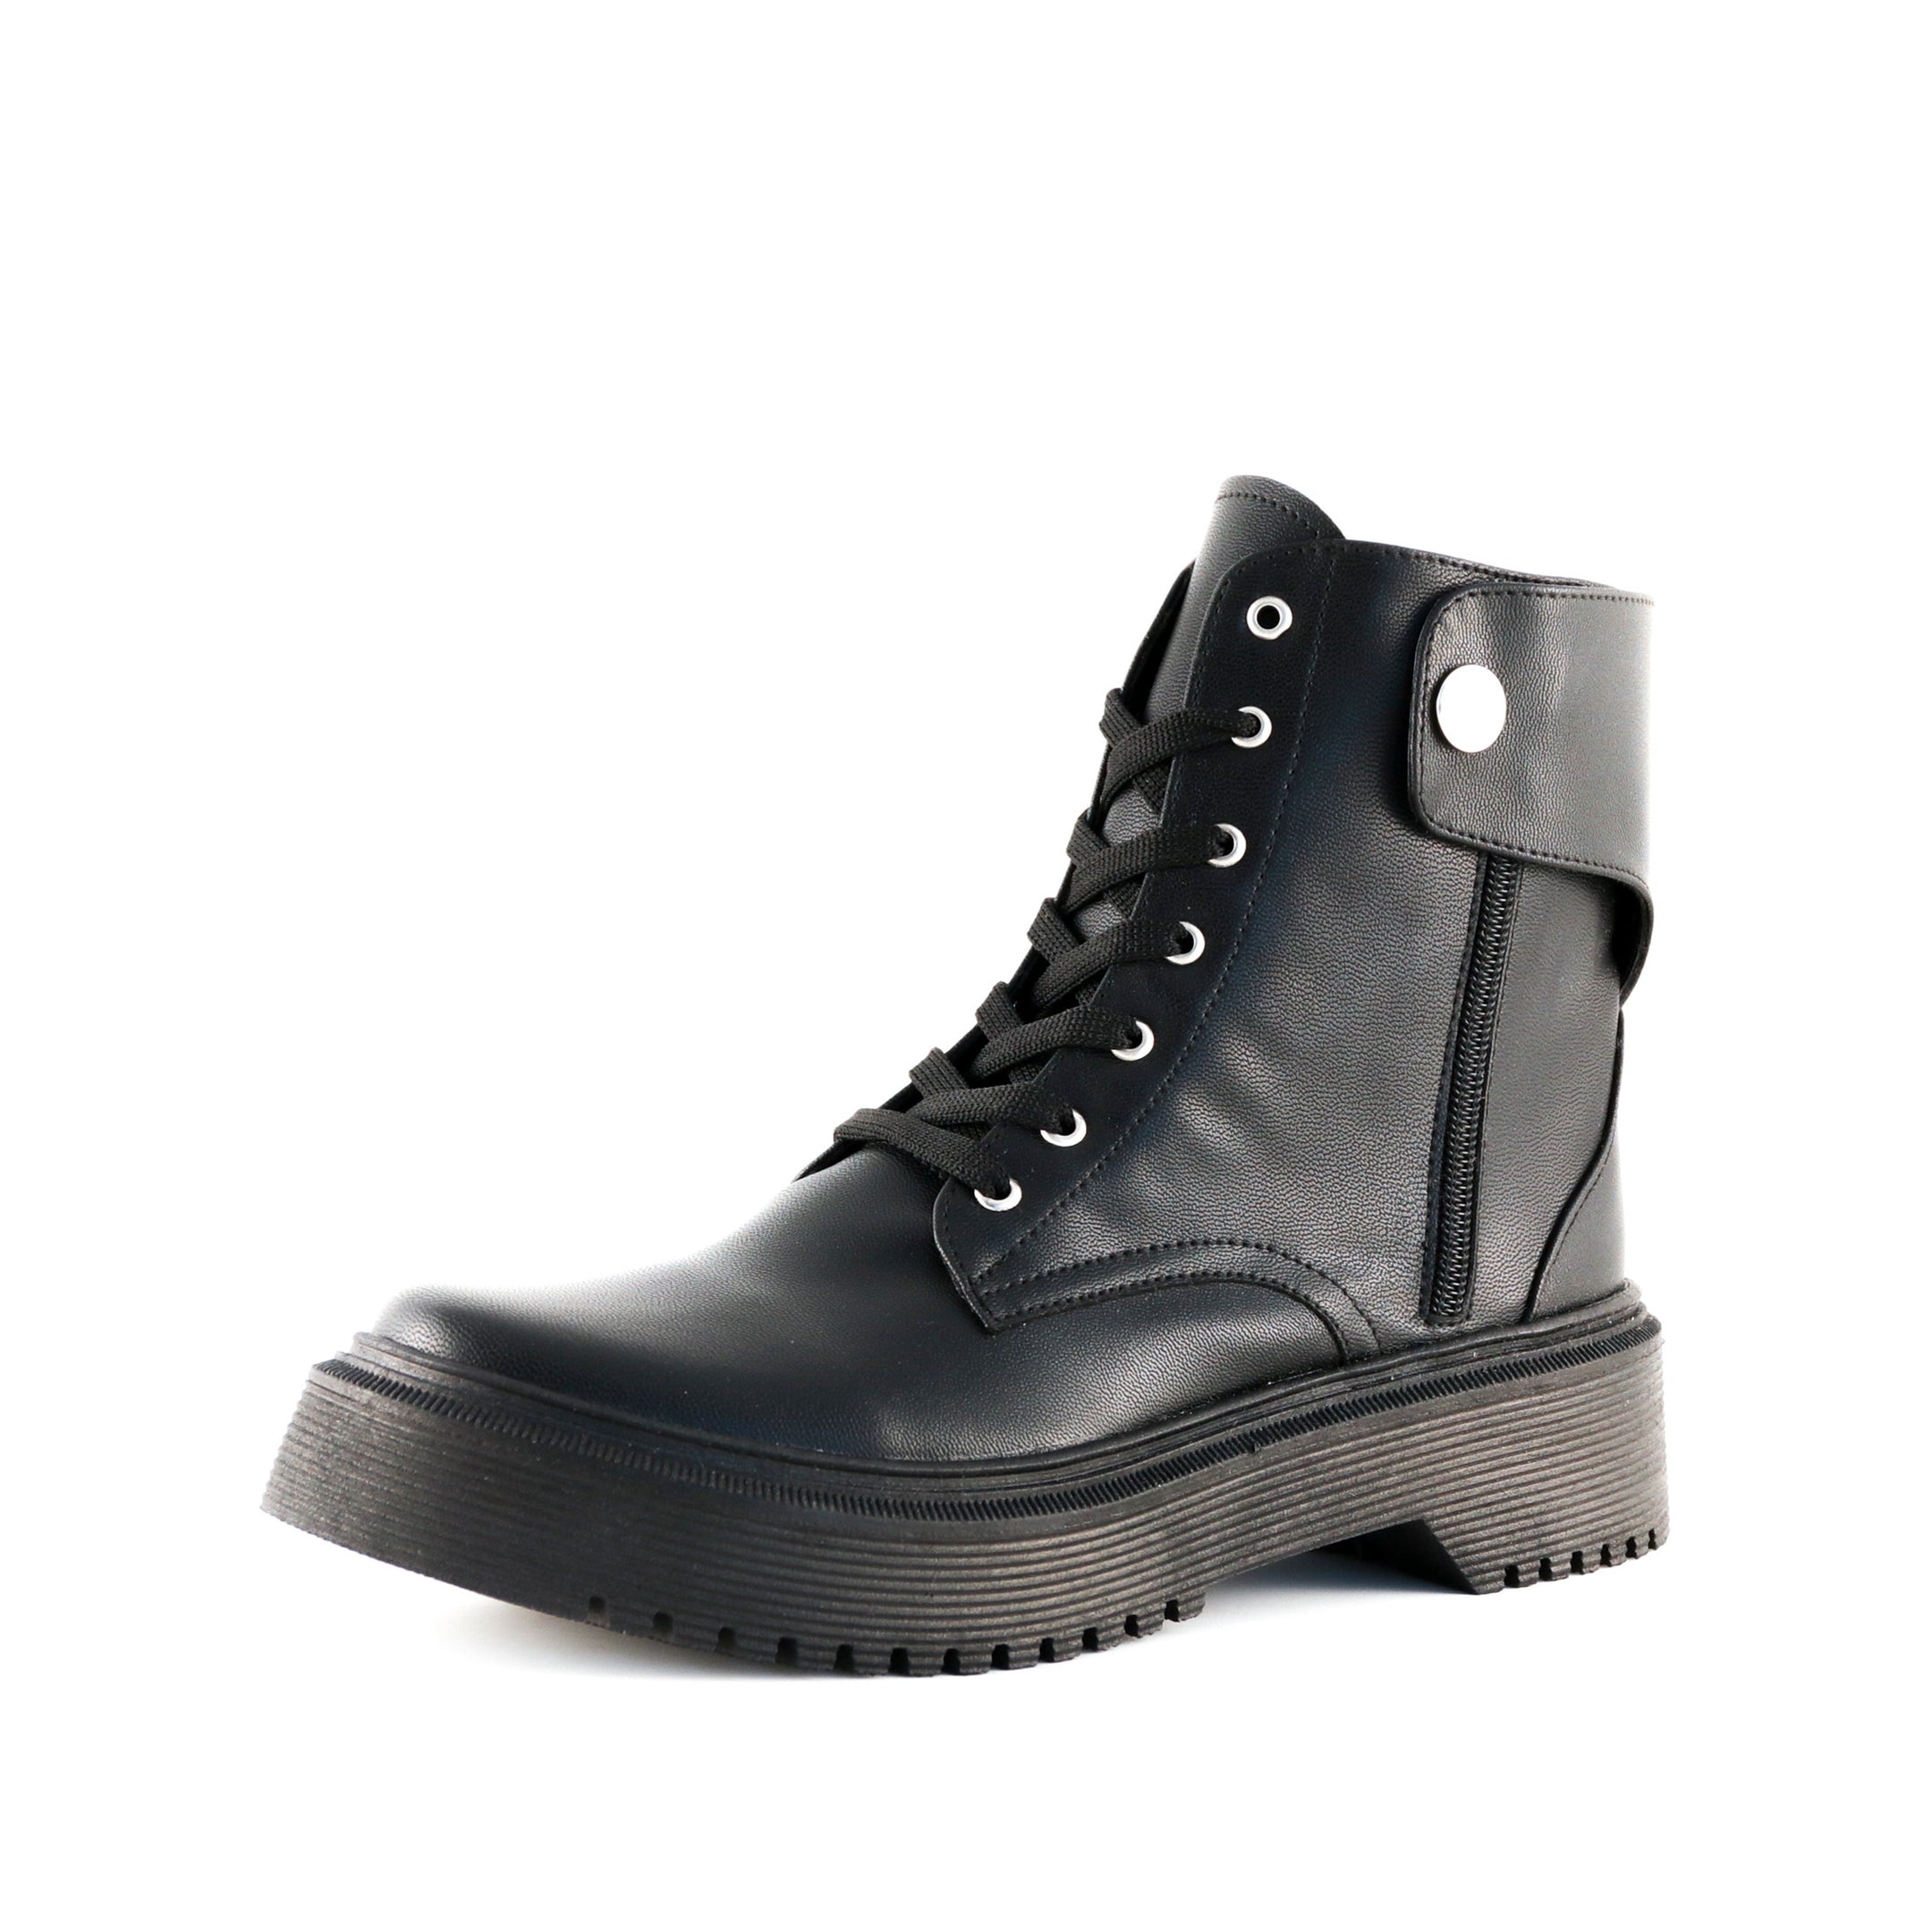 Buy Women's Runaway Combat Boots Black by Nest Shoes